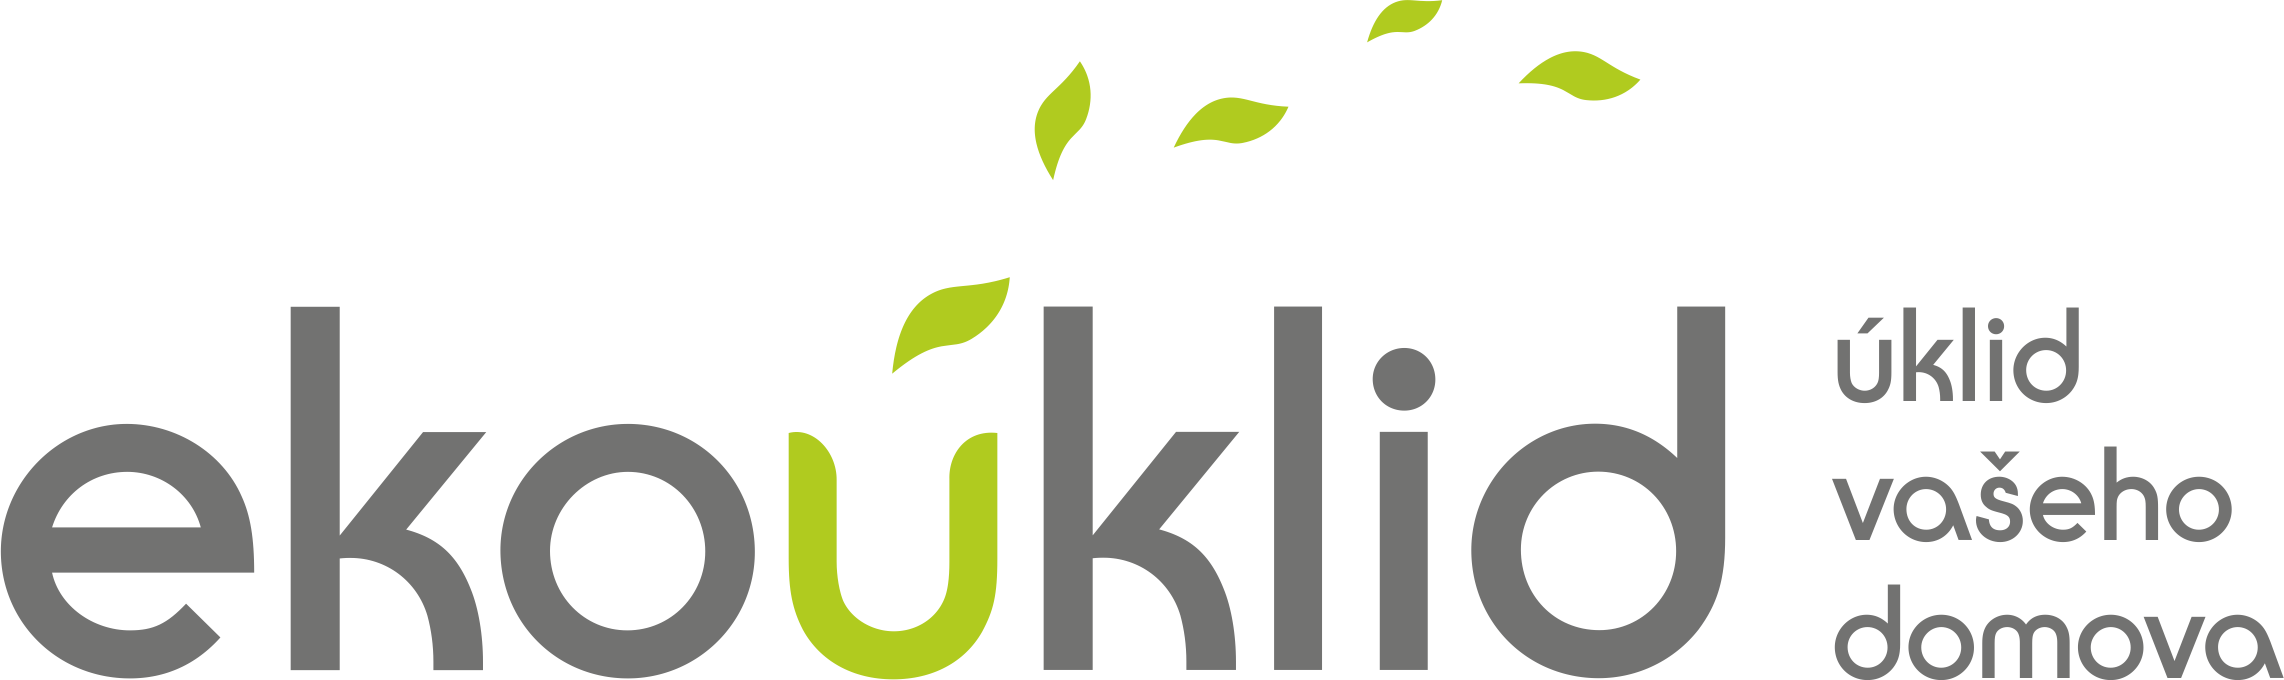 Ekouklid.com